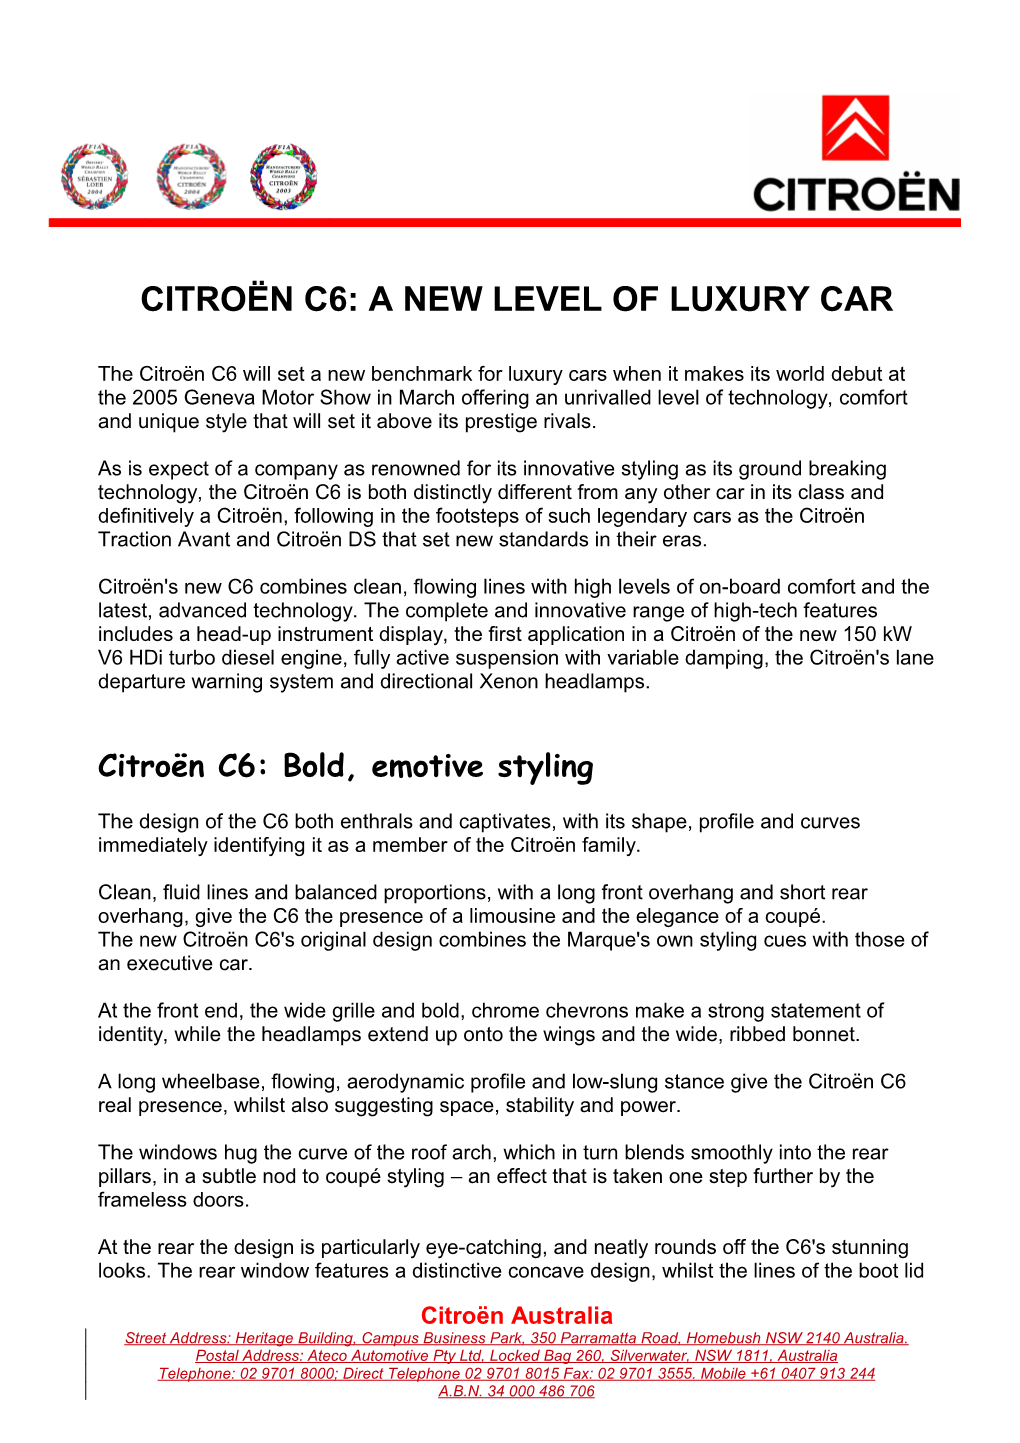 Citroën C6: a New Level of Luxury Car